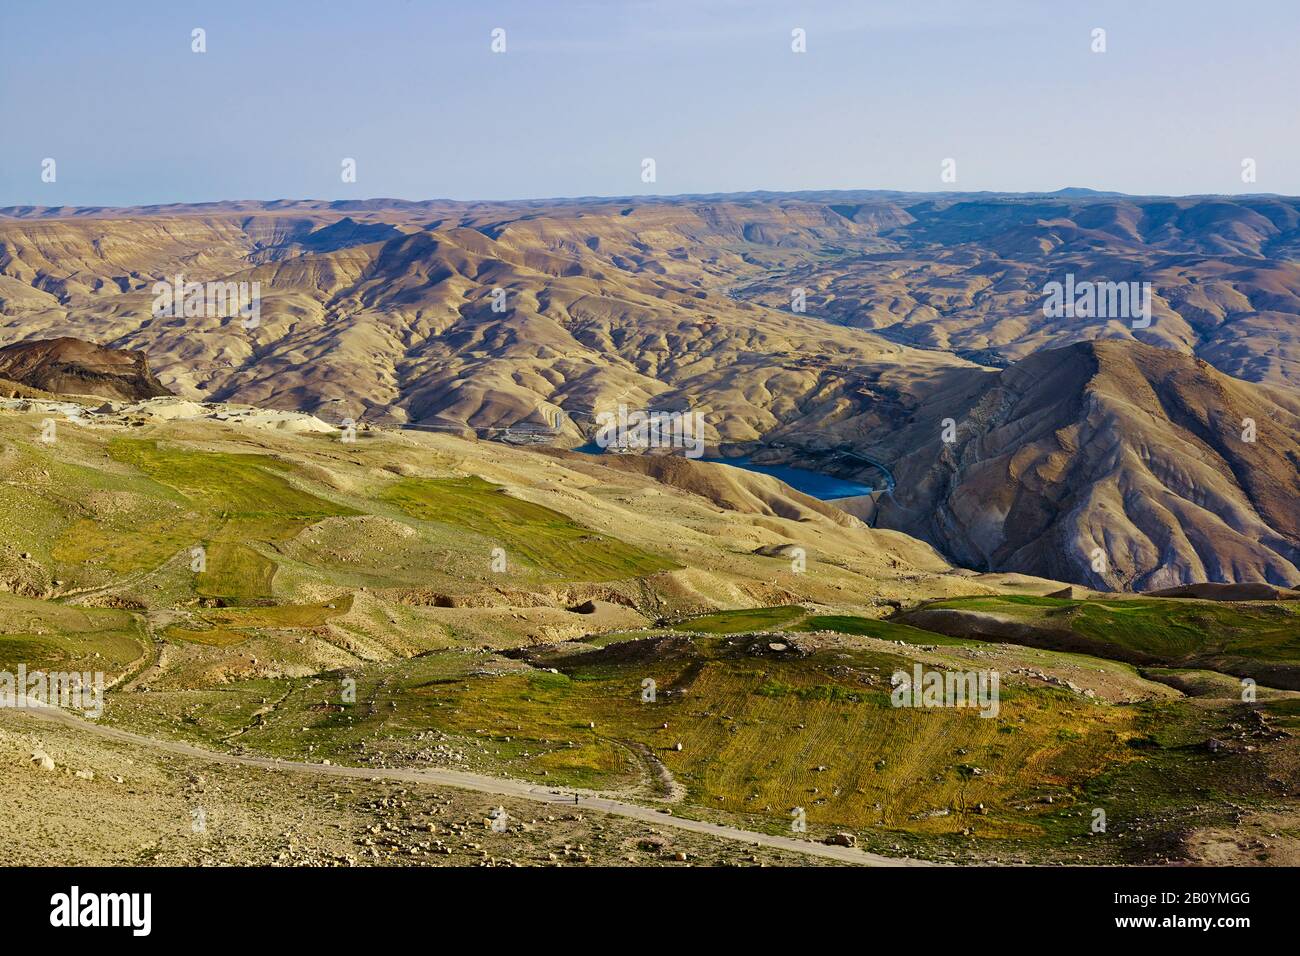 Wadi Hasa with Tannur Dam, Karak / Tafila Province, Jordan, Middle East Stock Photo - Alamy